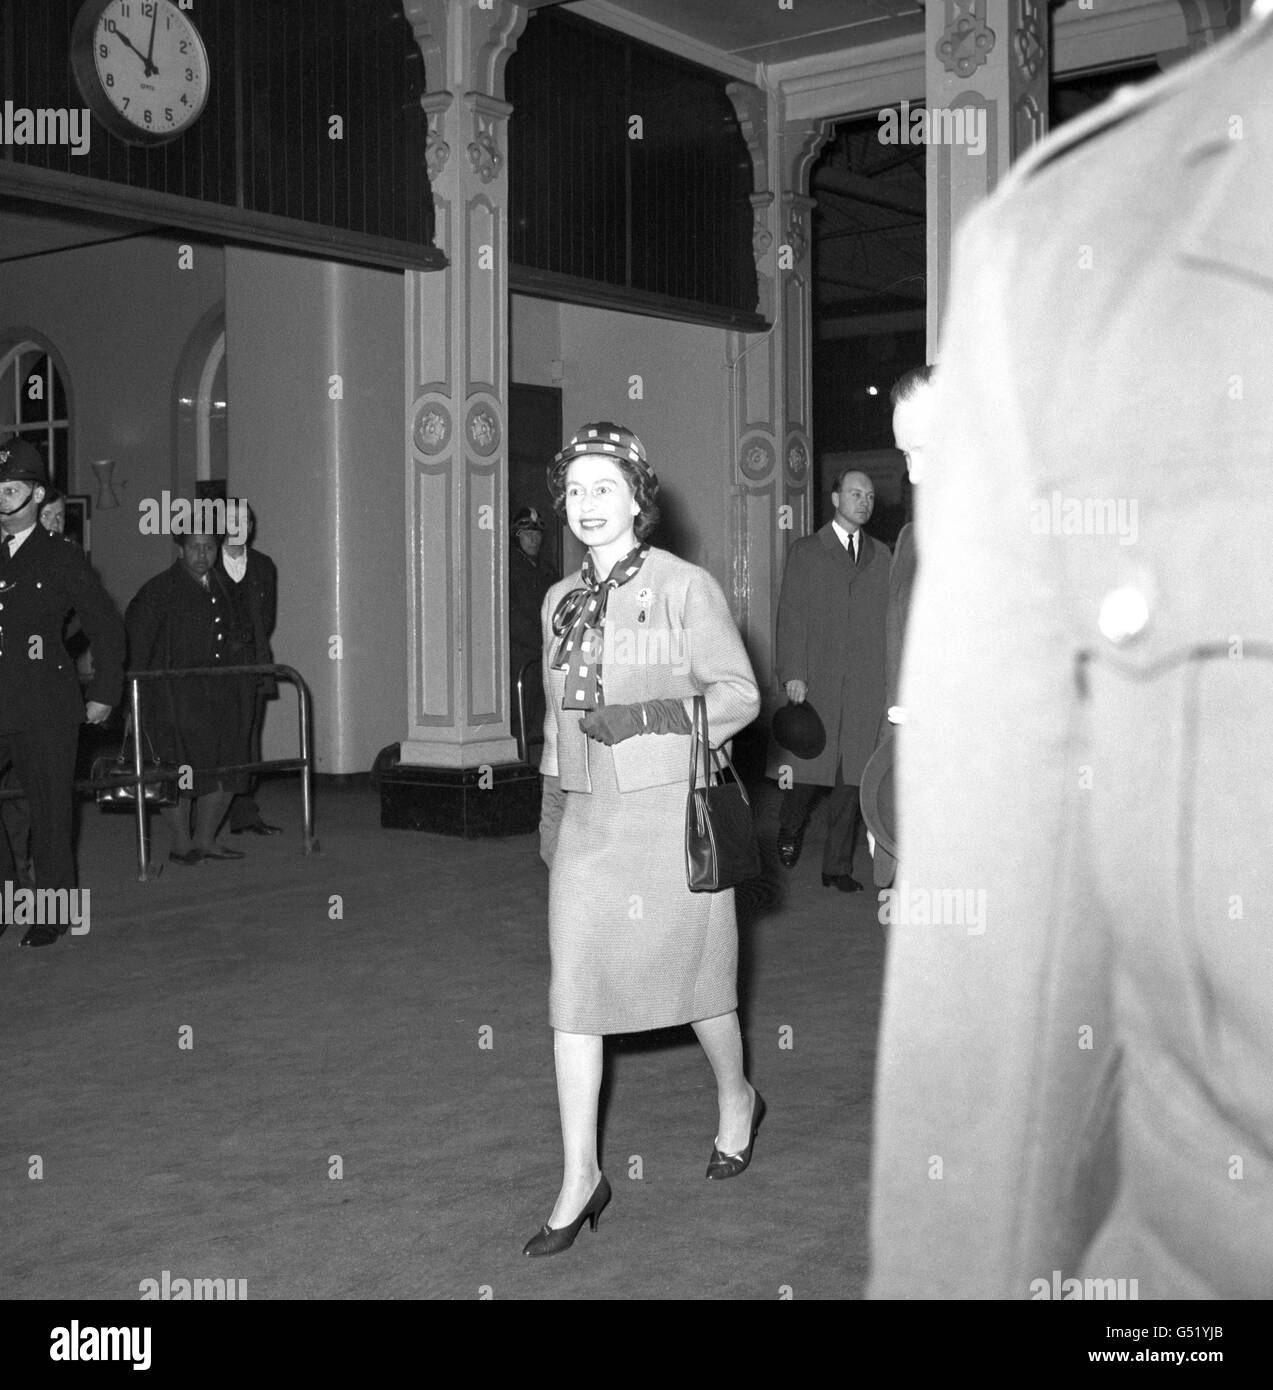 Royalty - Königin Elizabeth II - Paddington Station, London Stockfoto